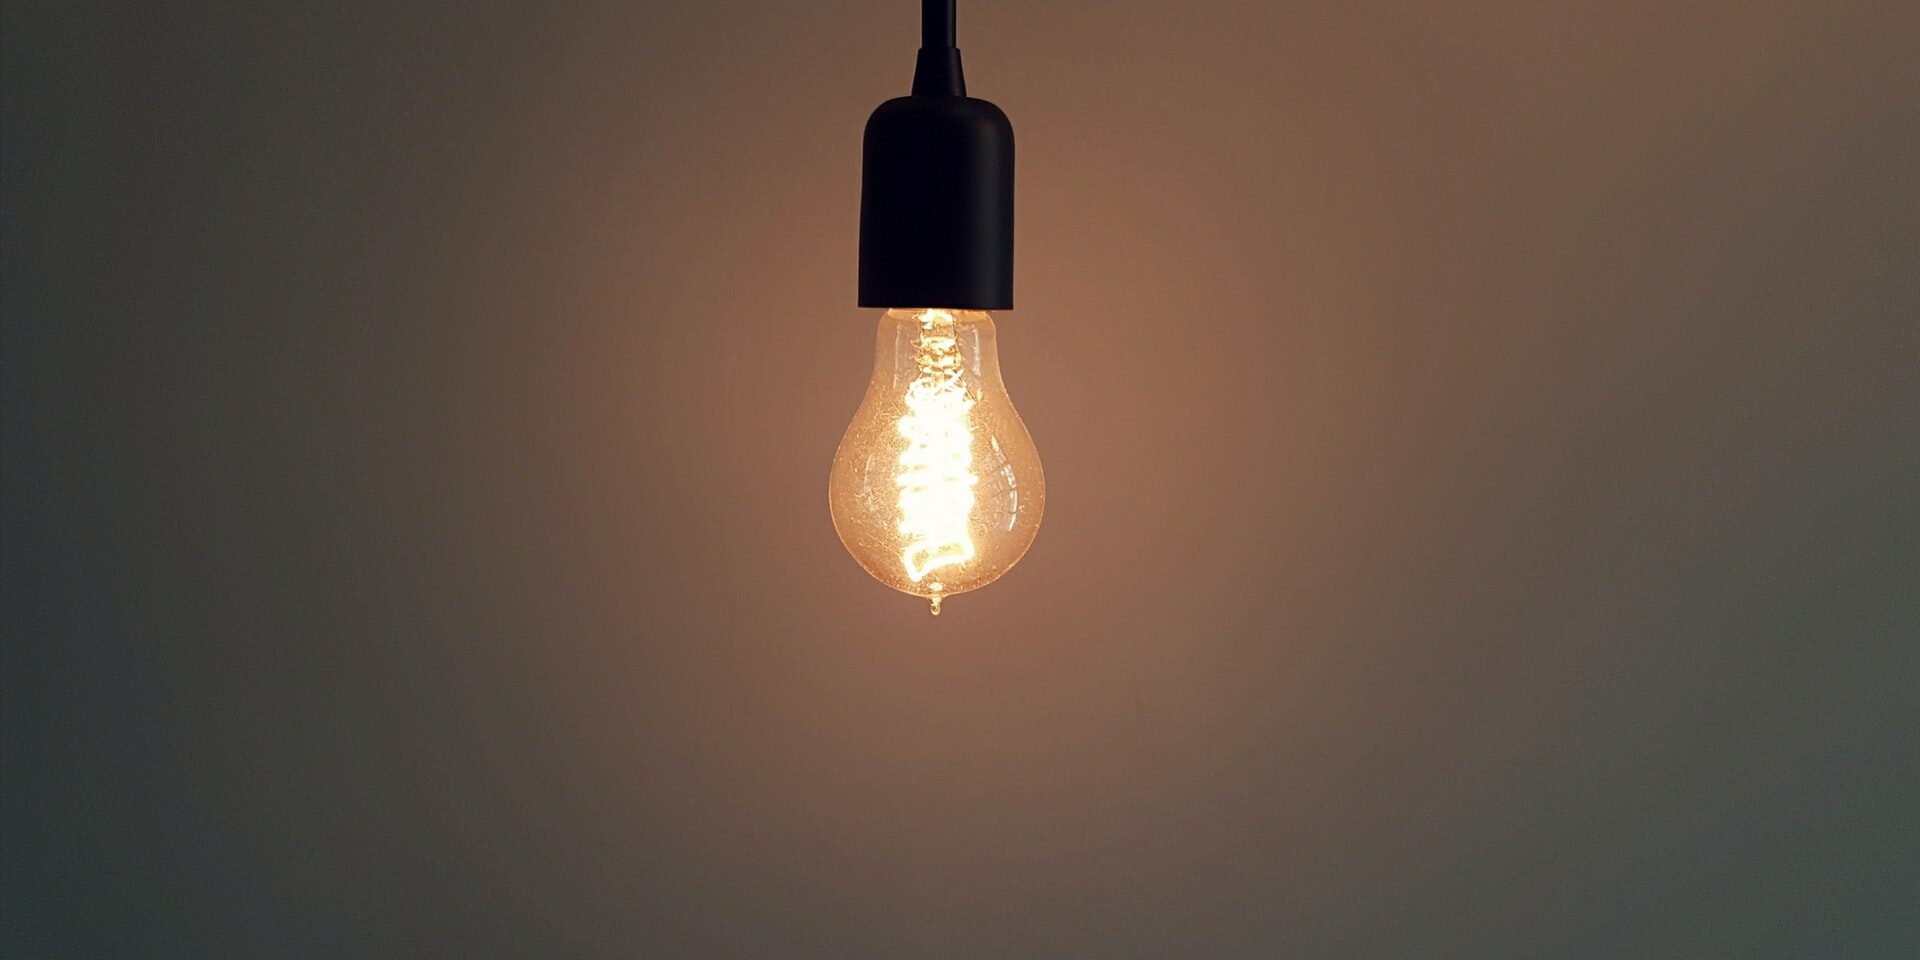 light bulb great ideal one little idea a week